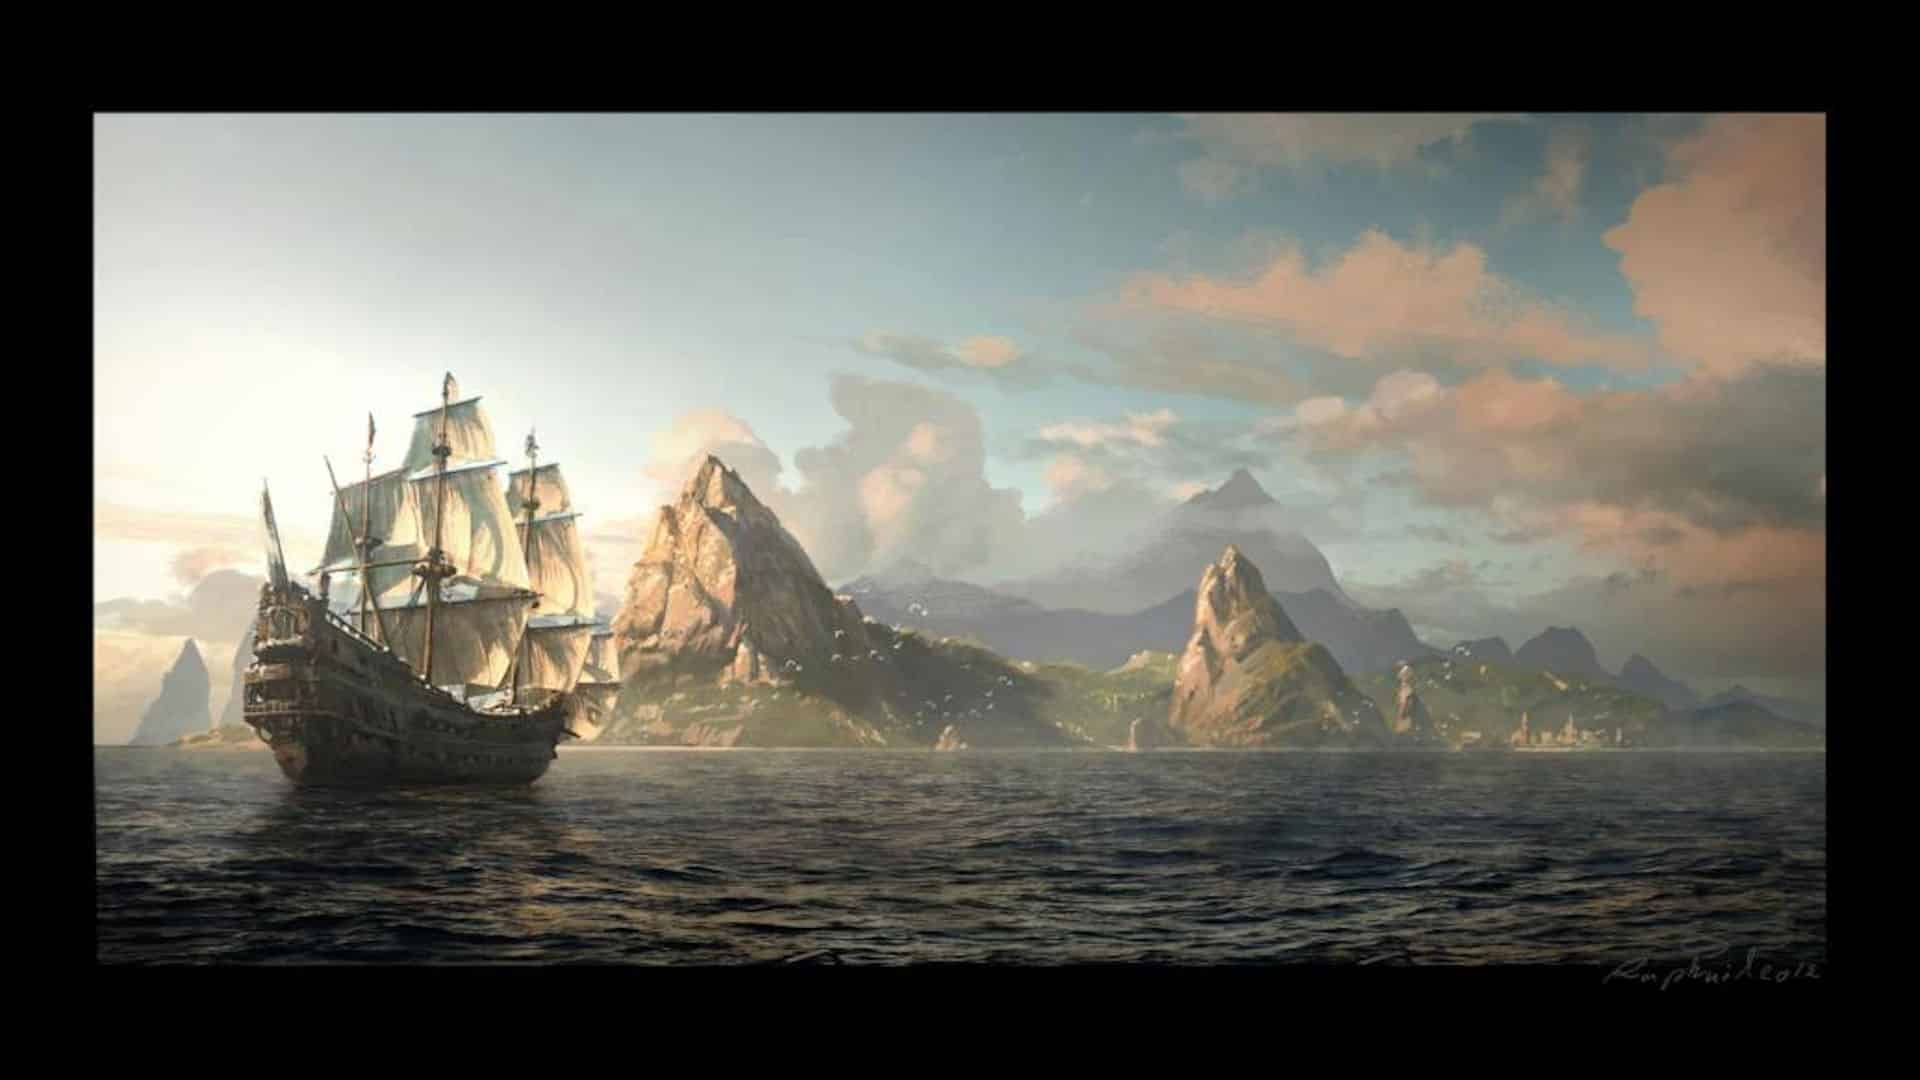 Assassin’s Creed 4 Painting Wallpaper - 1920 x 1080 jpeg 194kB